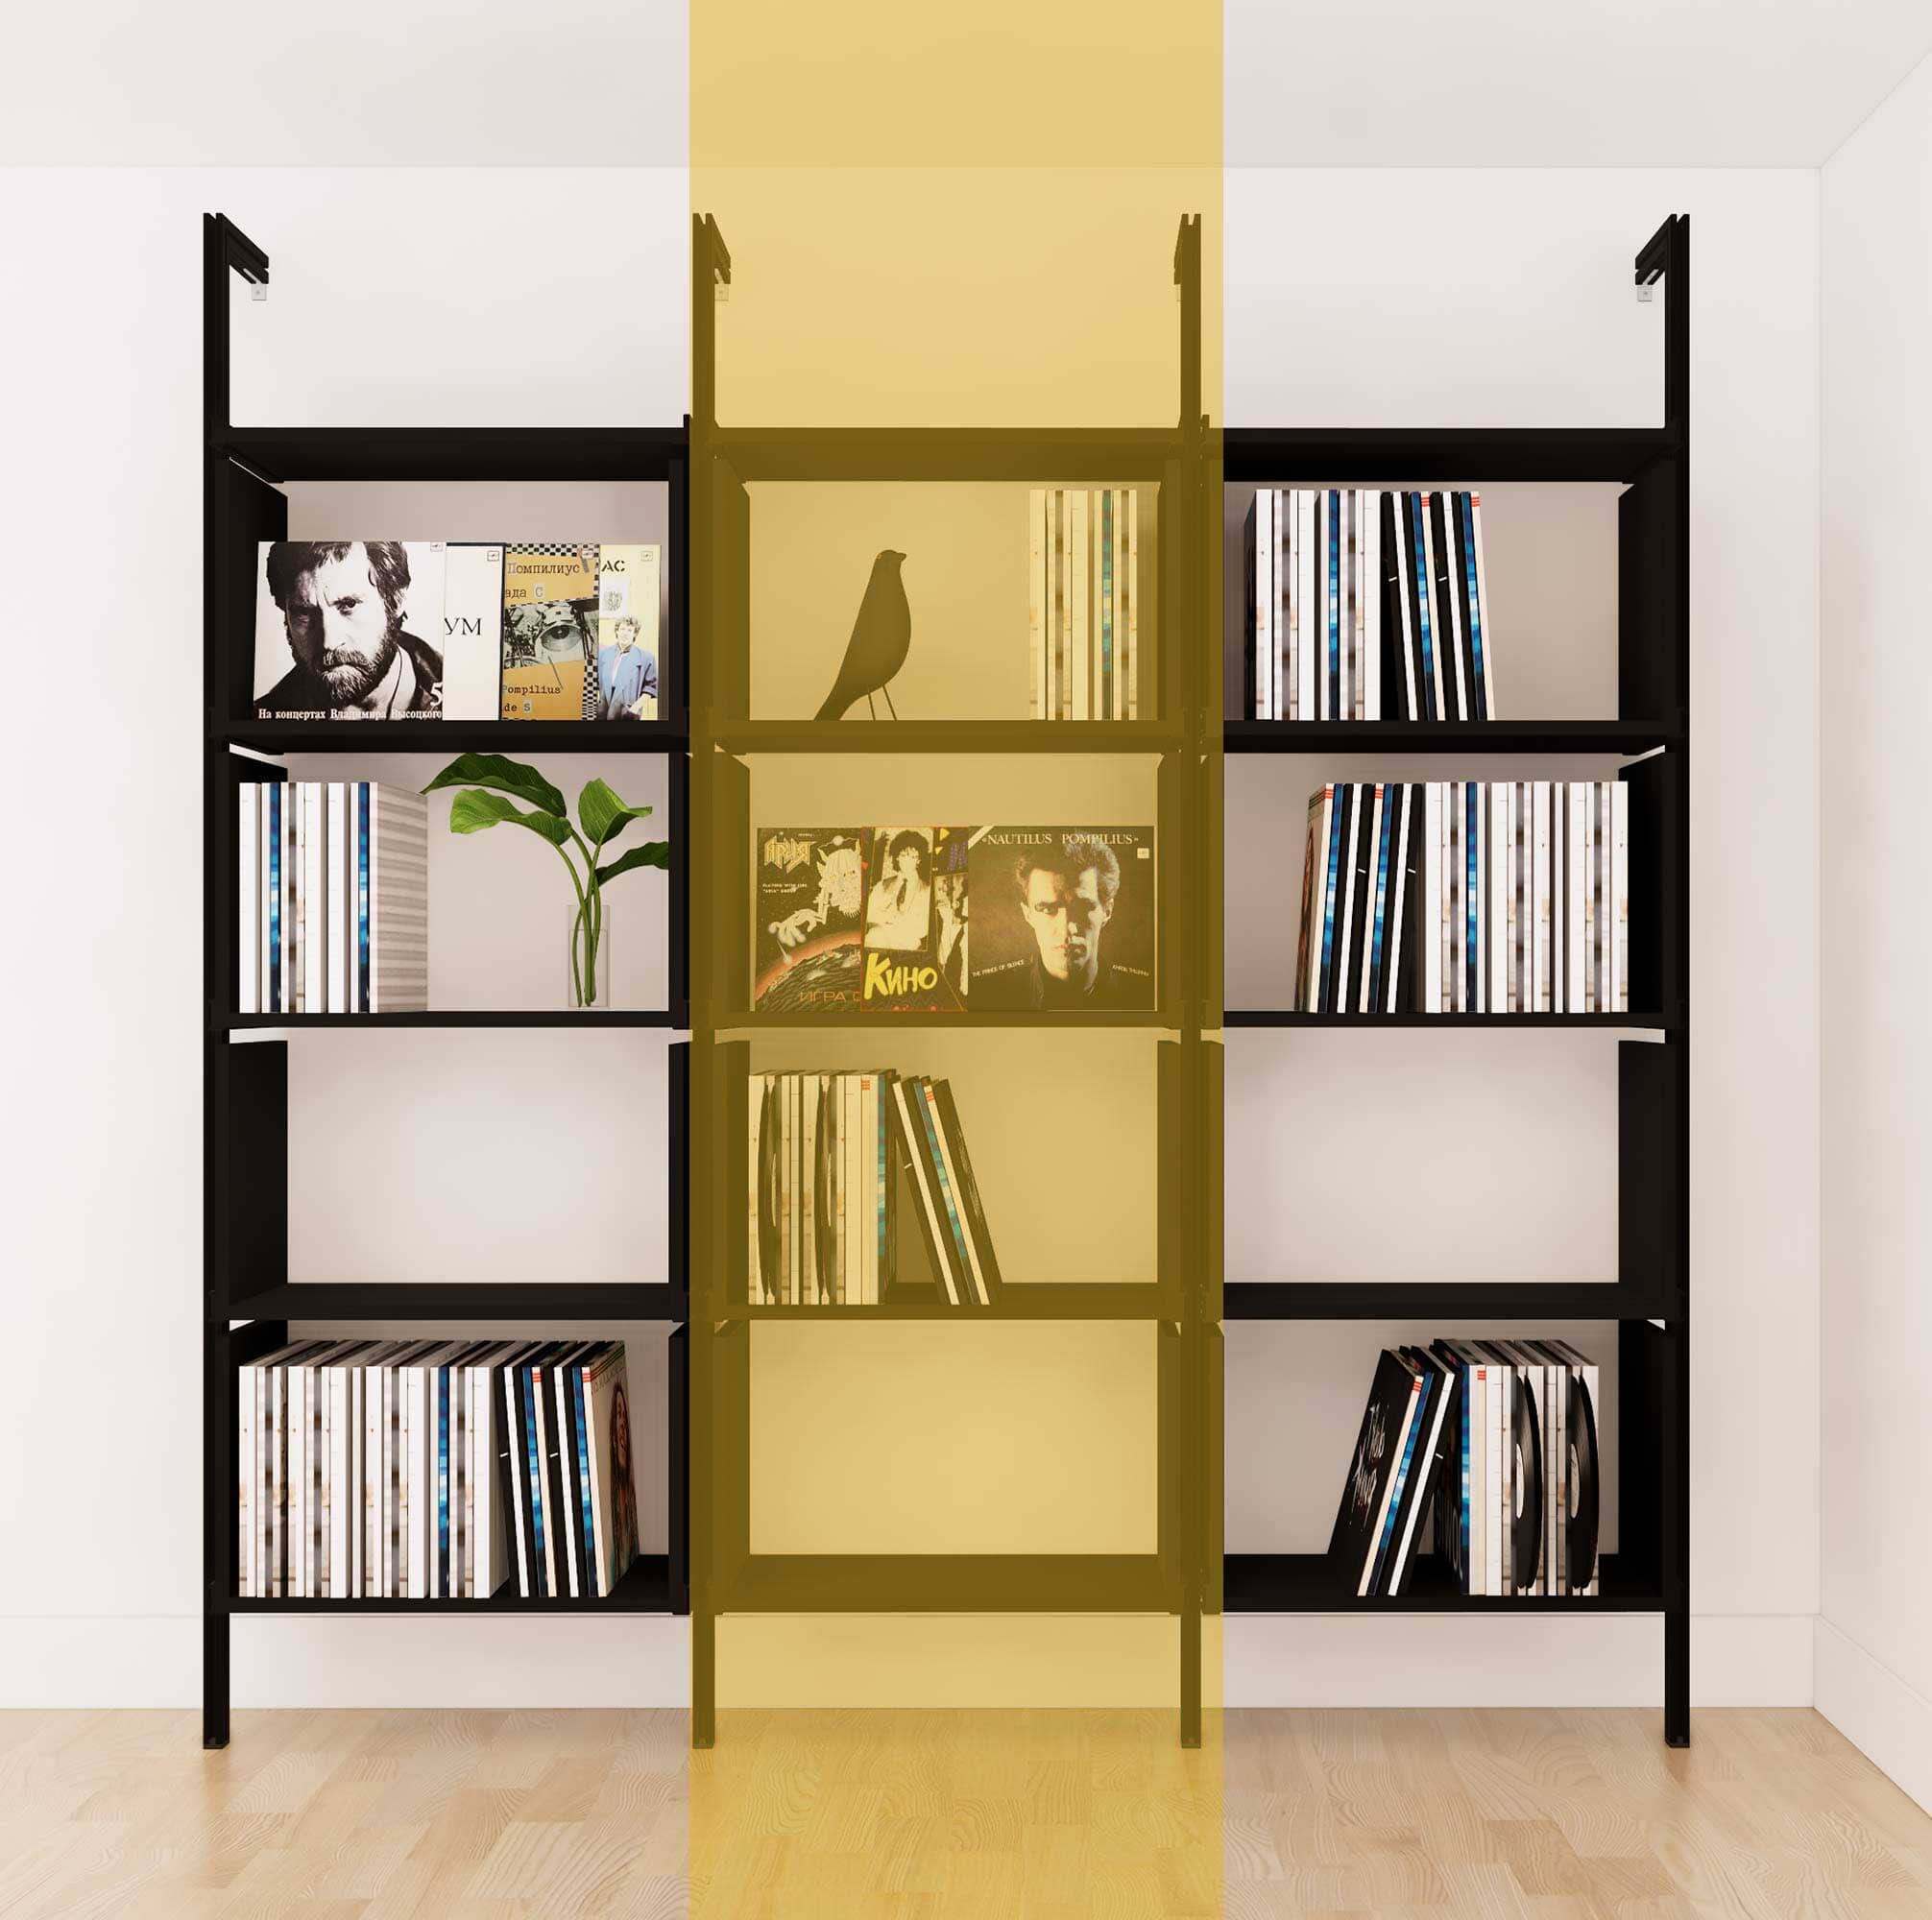 Vinyl Storage - Organize and Decorate Everything